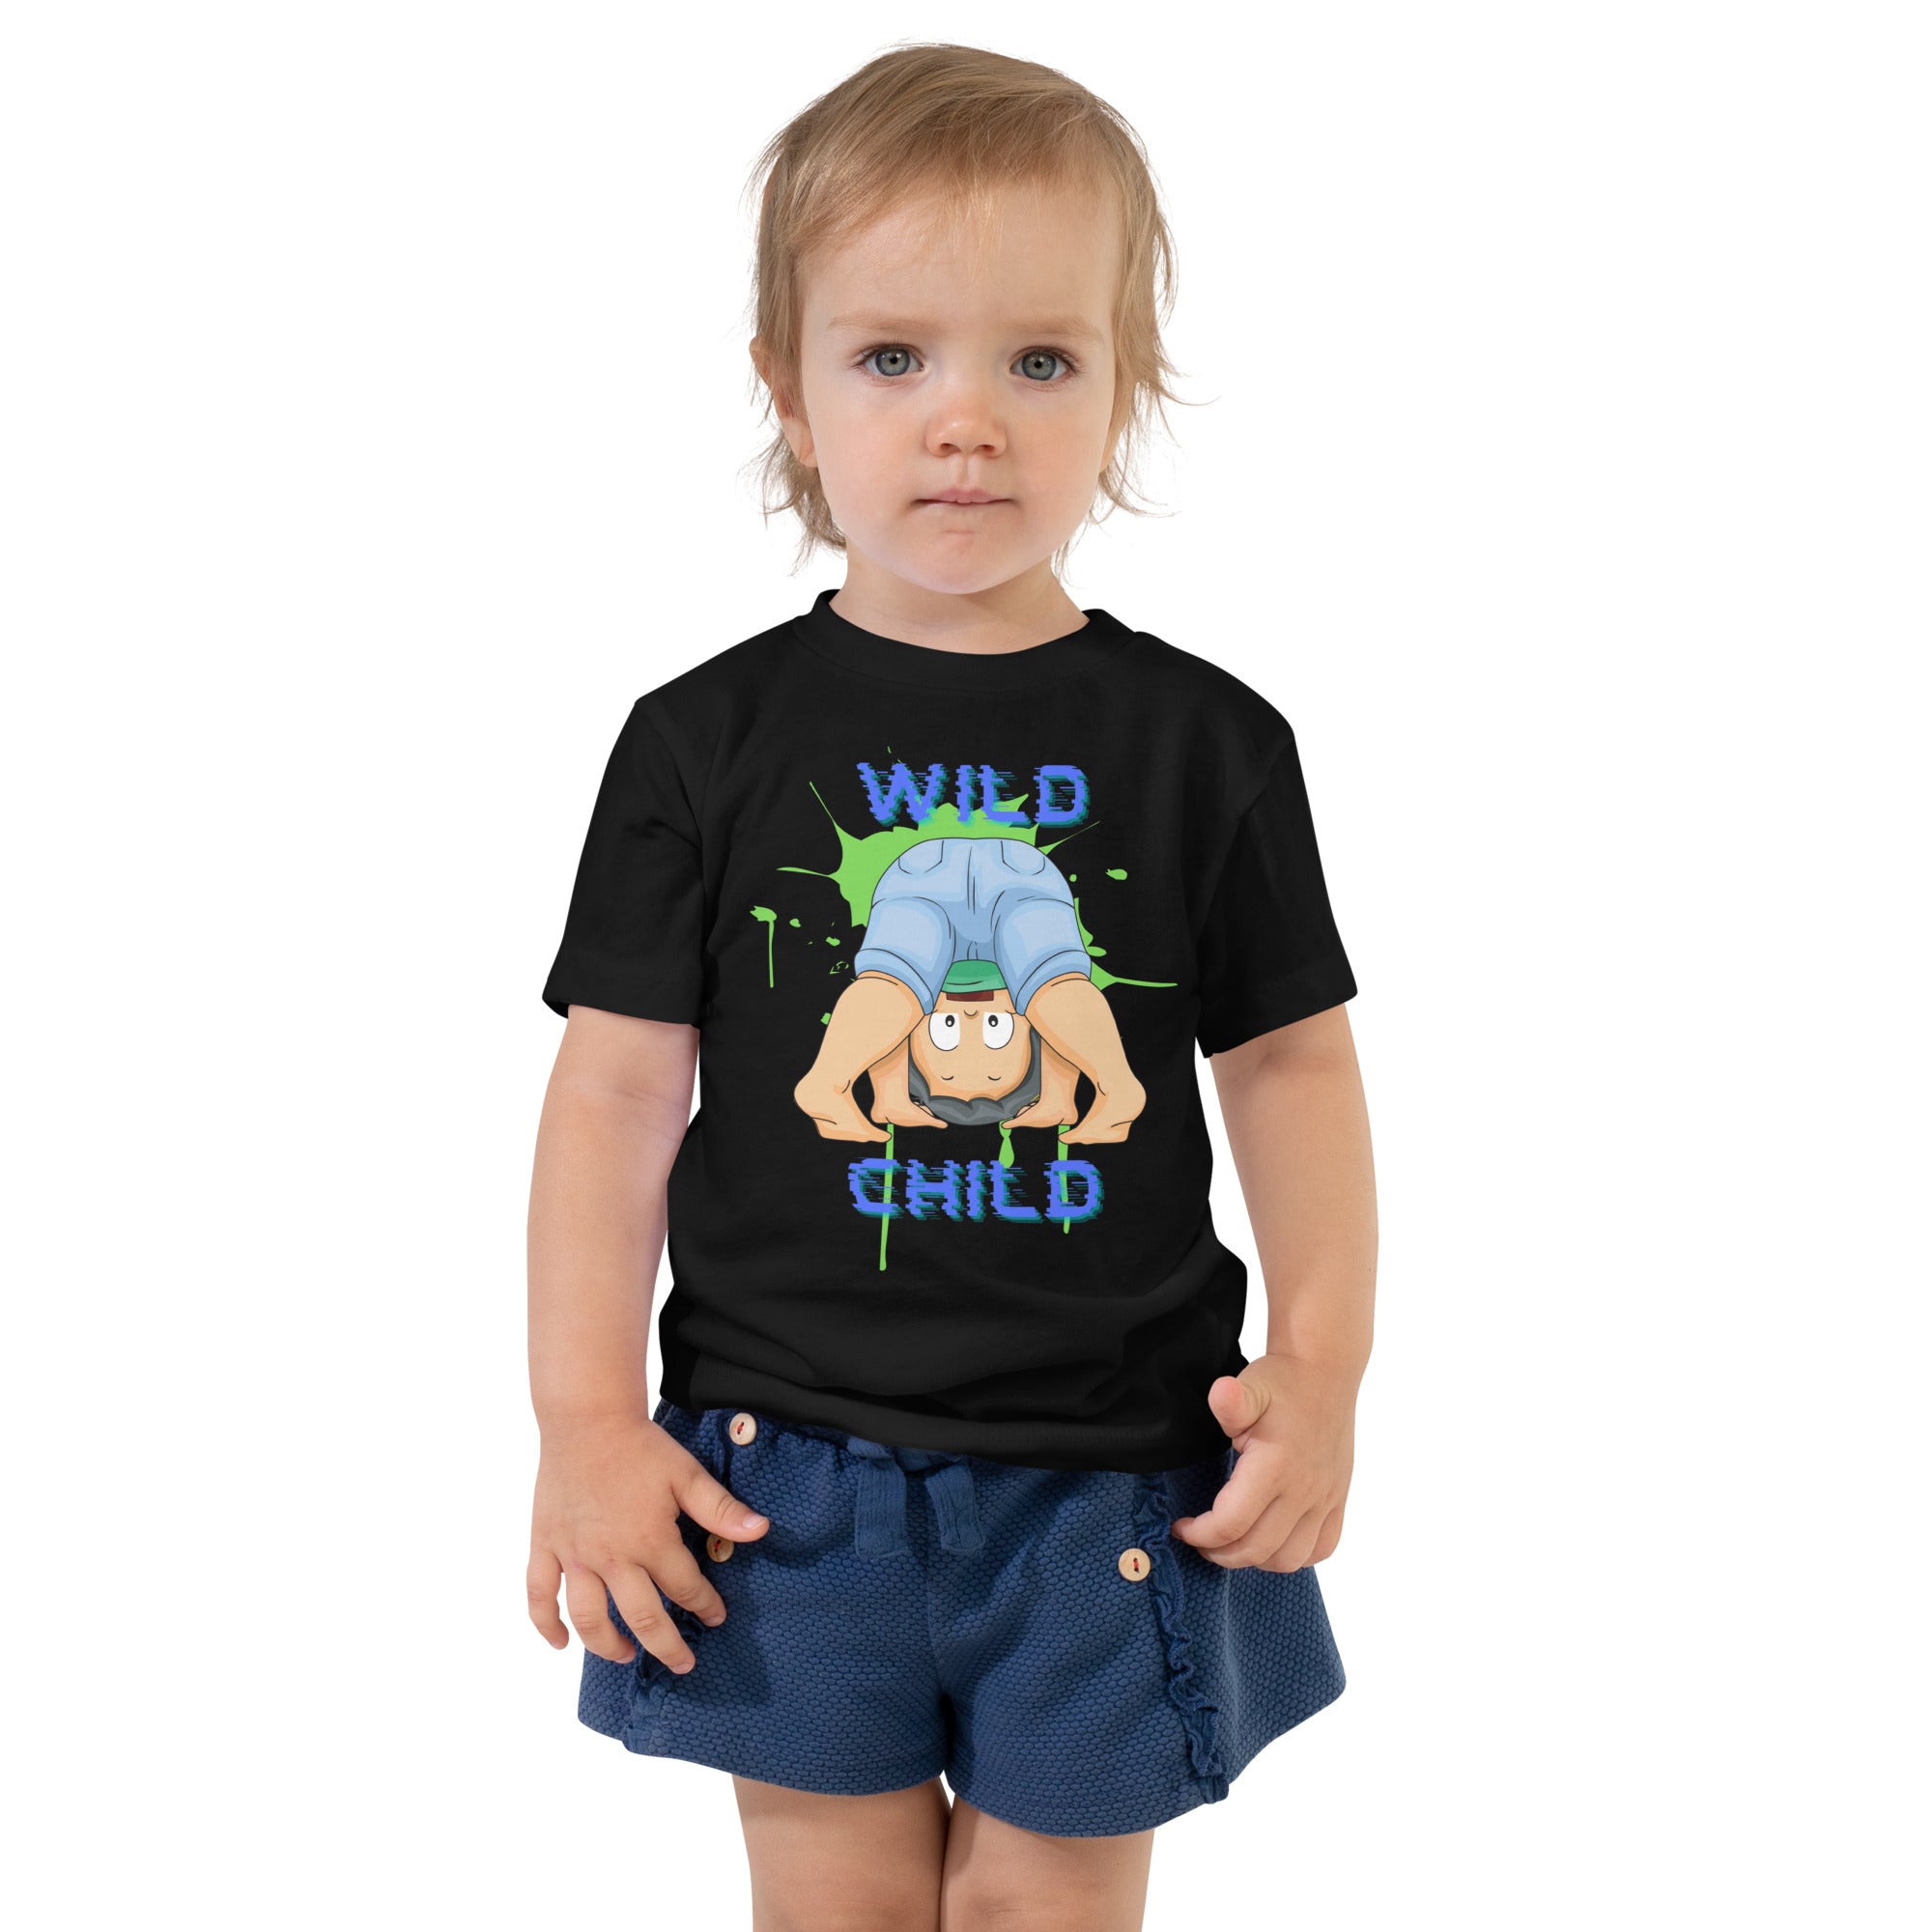 Toddler Short Sleeve Tee - Wild Child (Black)